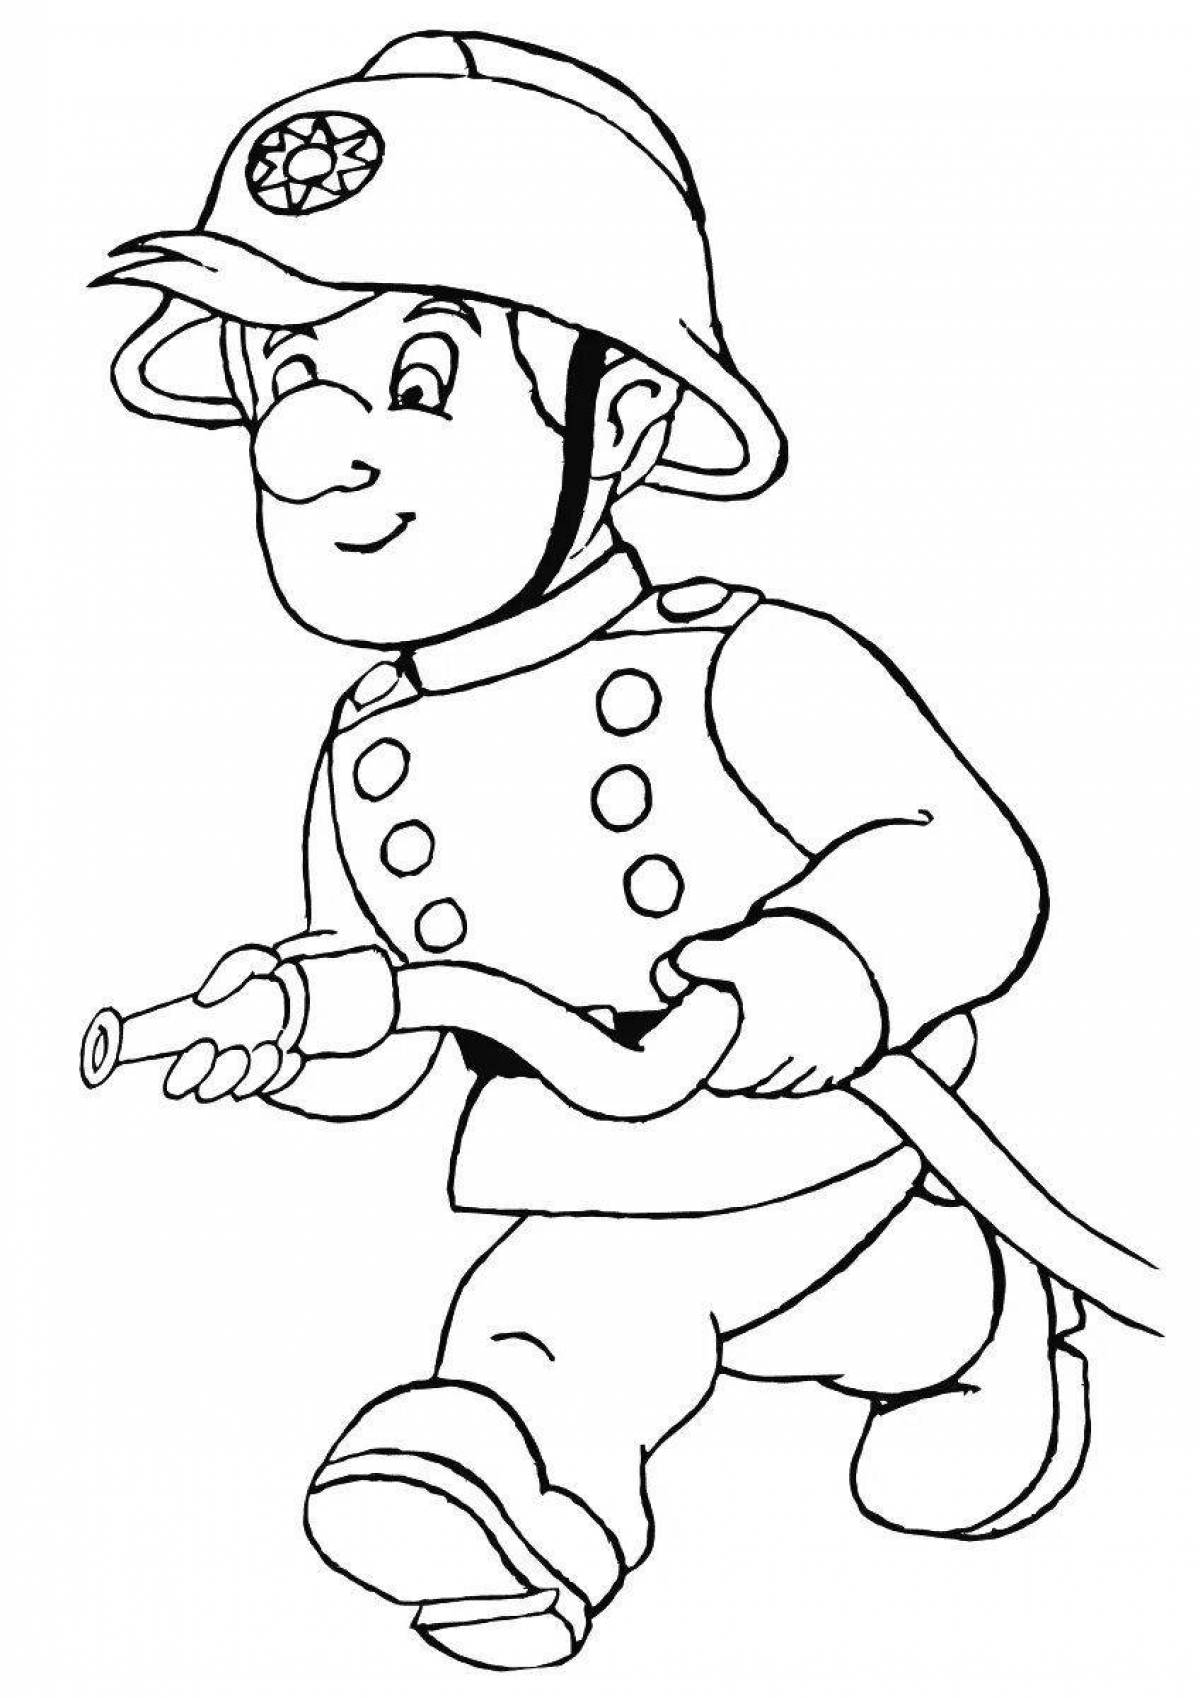 Funny fireman drawing for kids